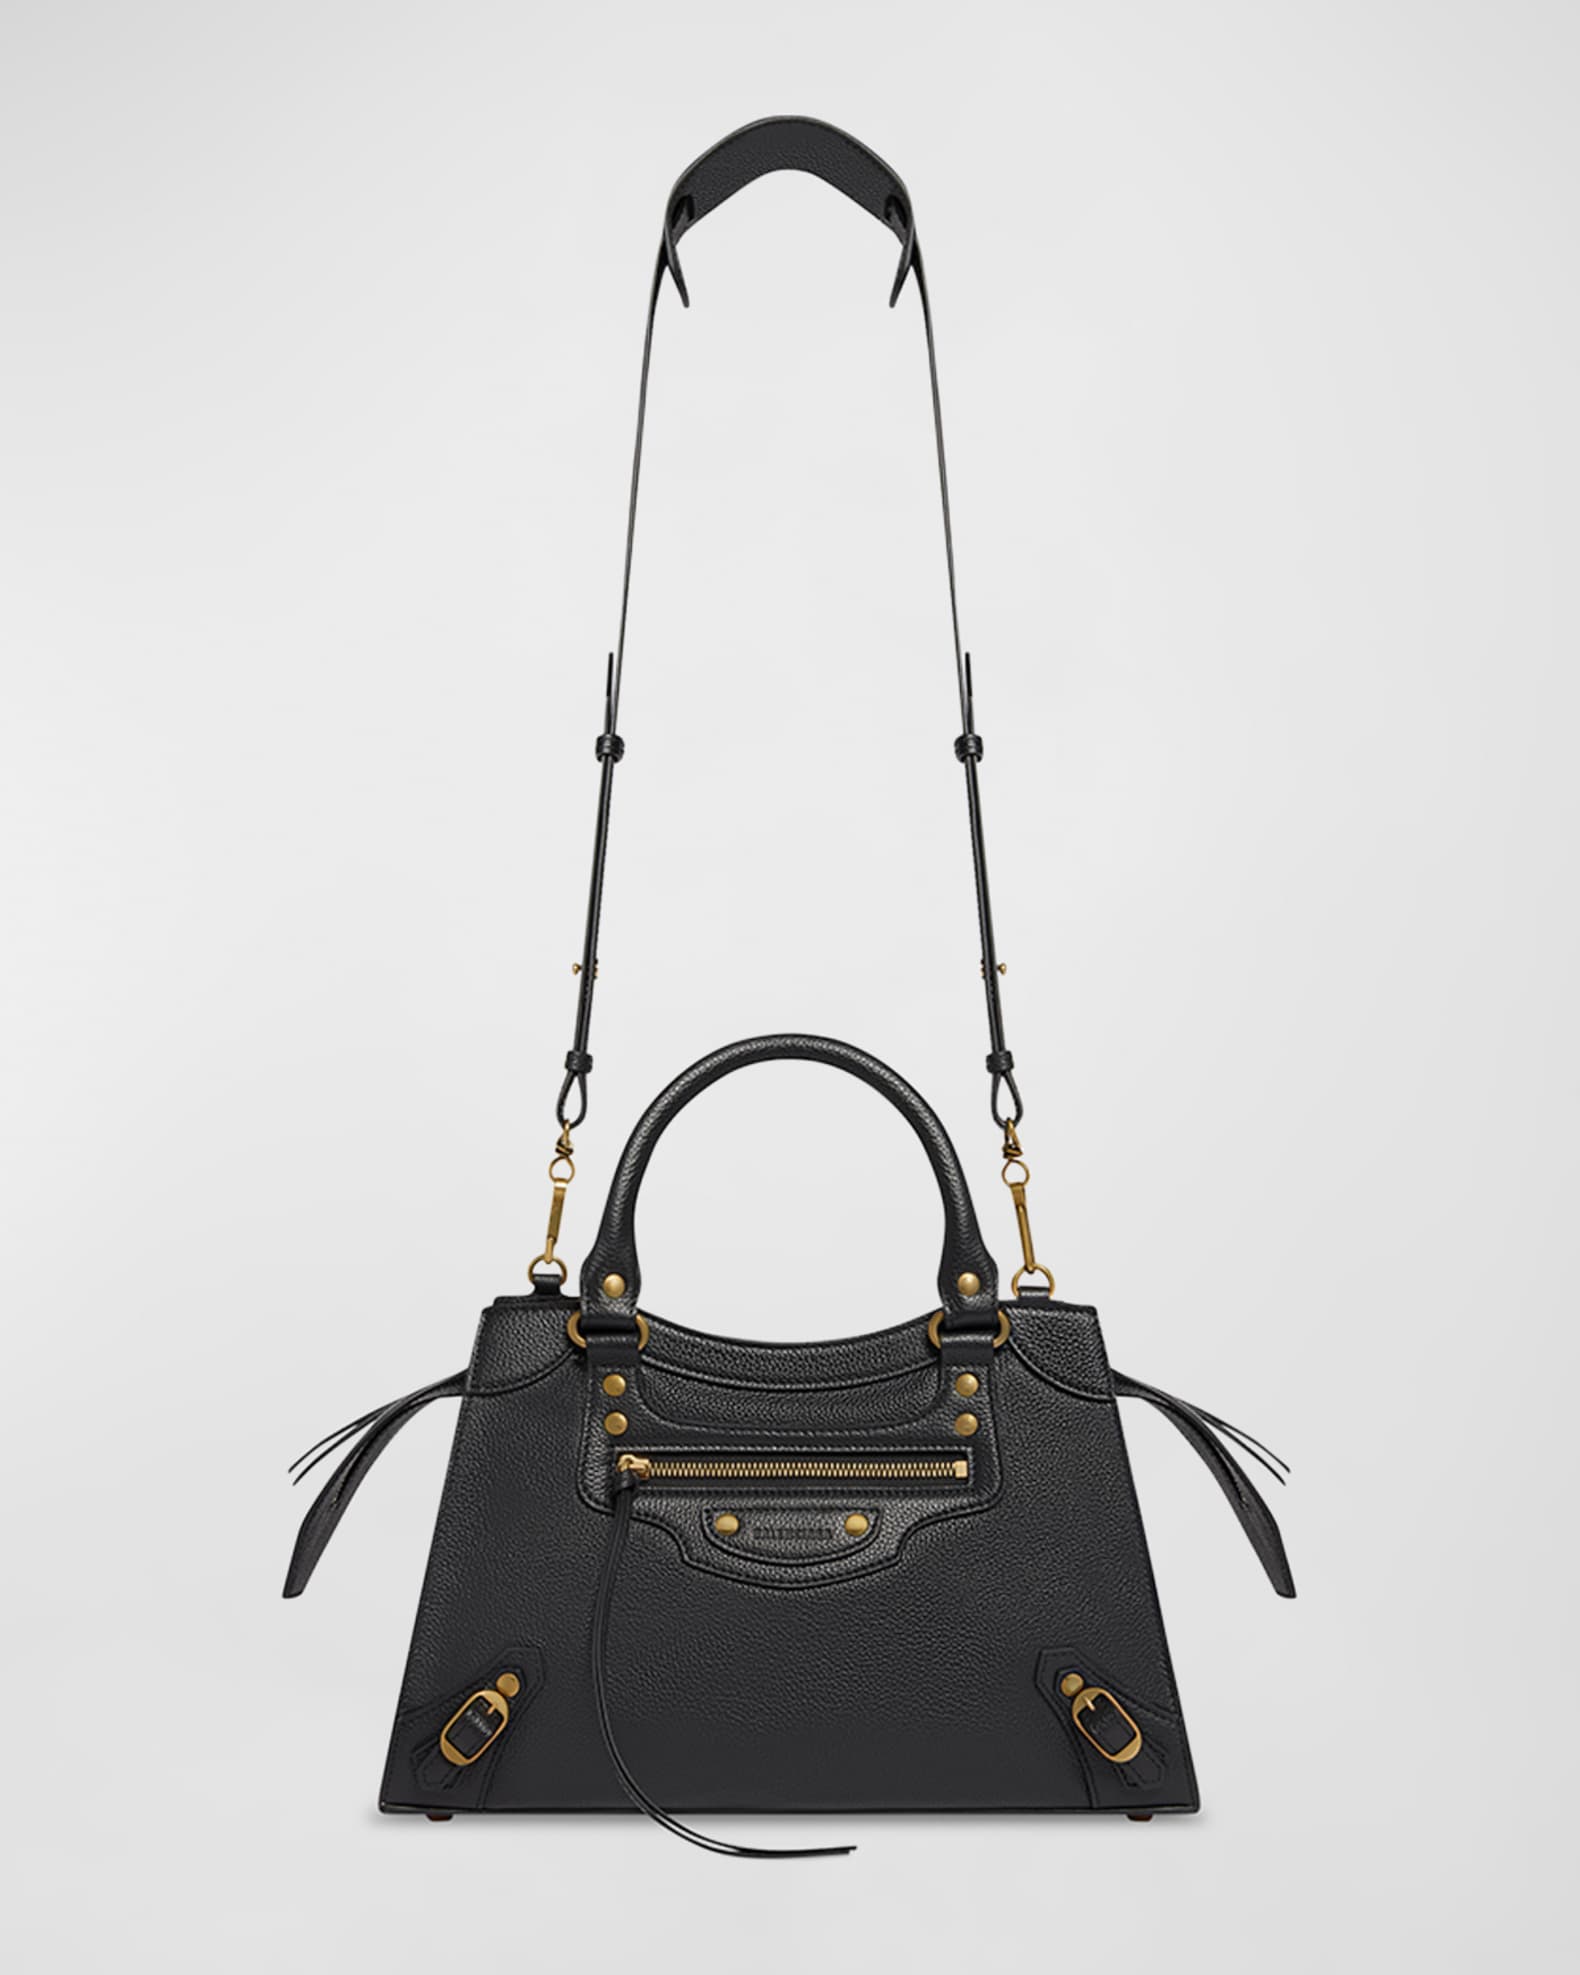 Women's Neo Classic Small Handbag in Black